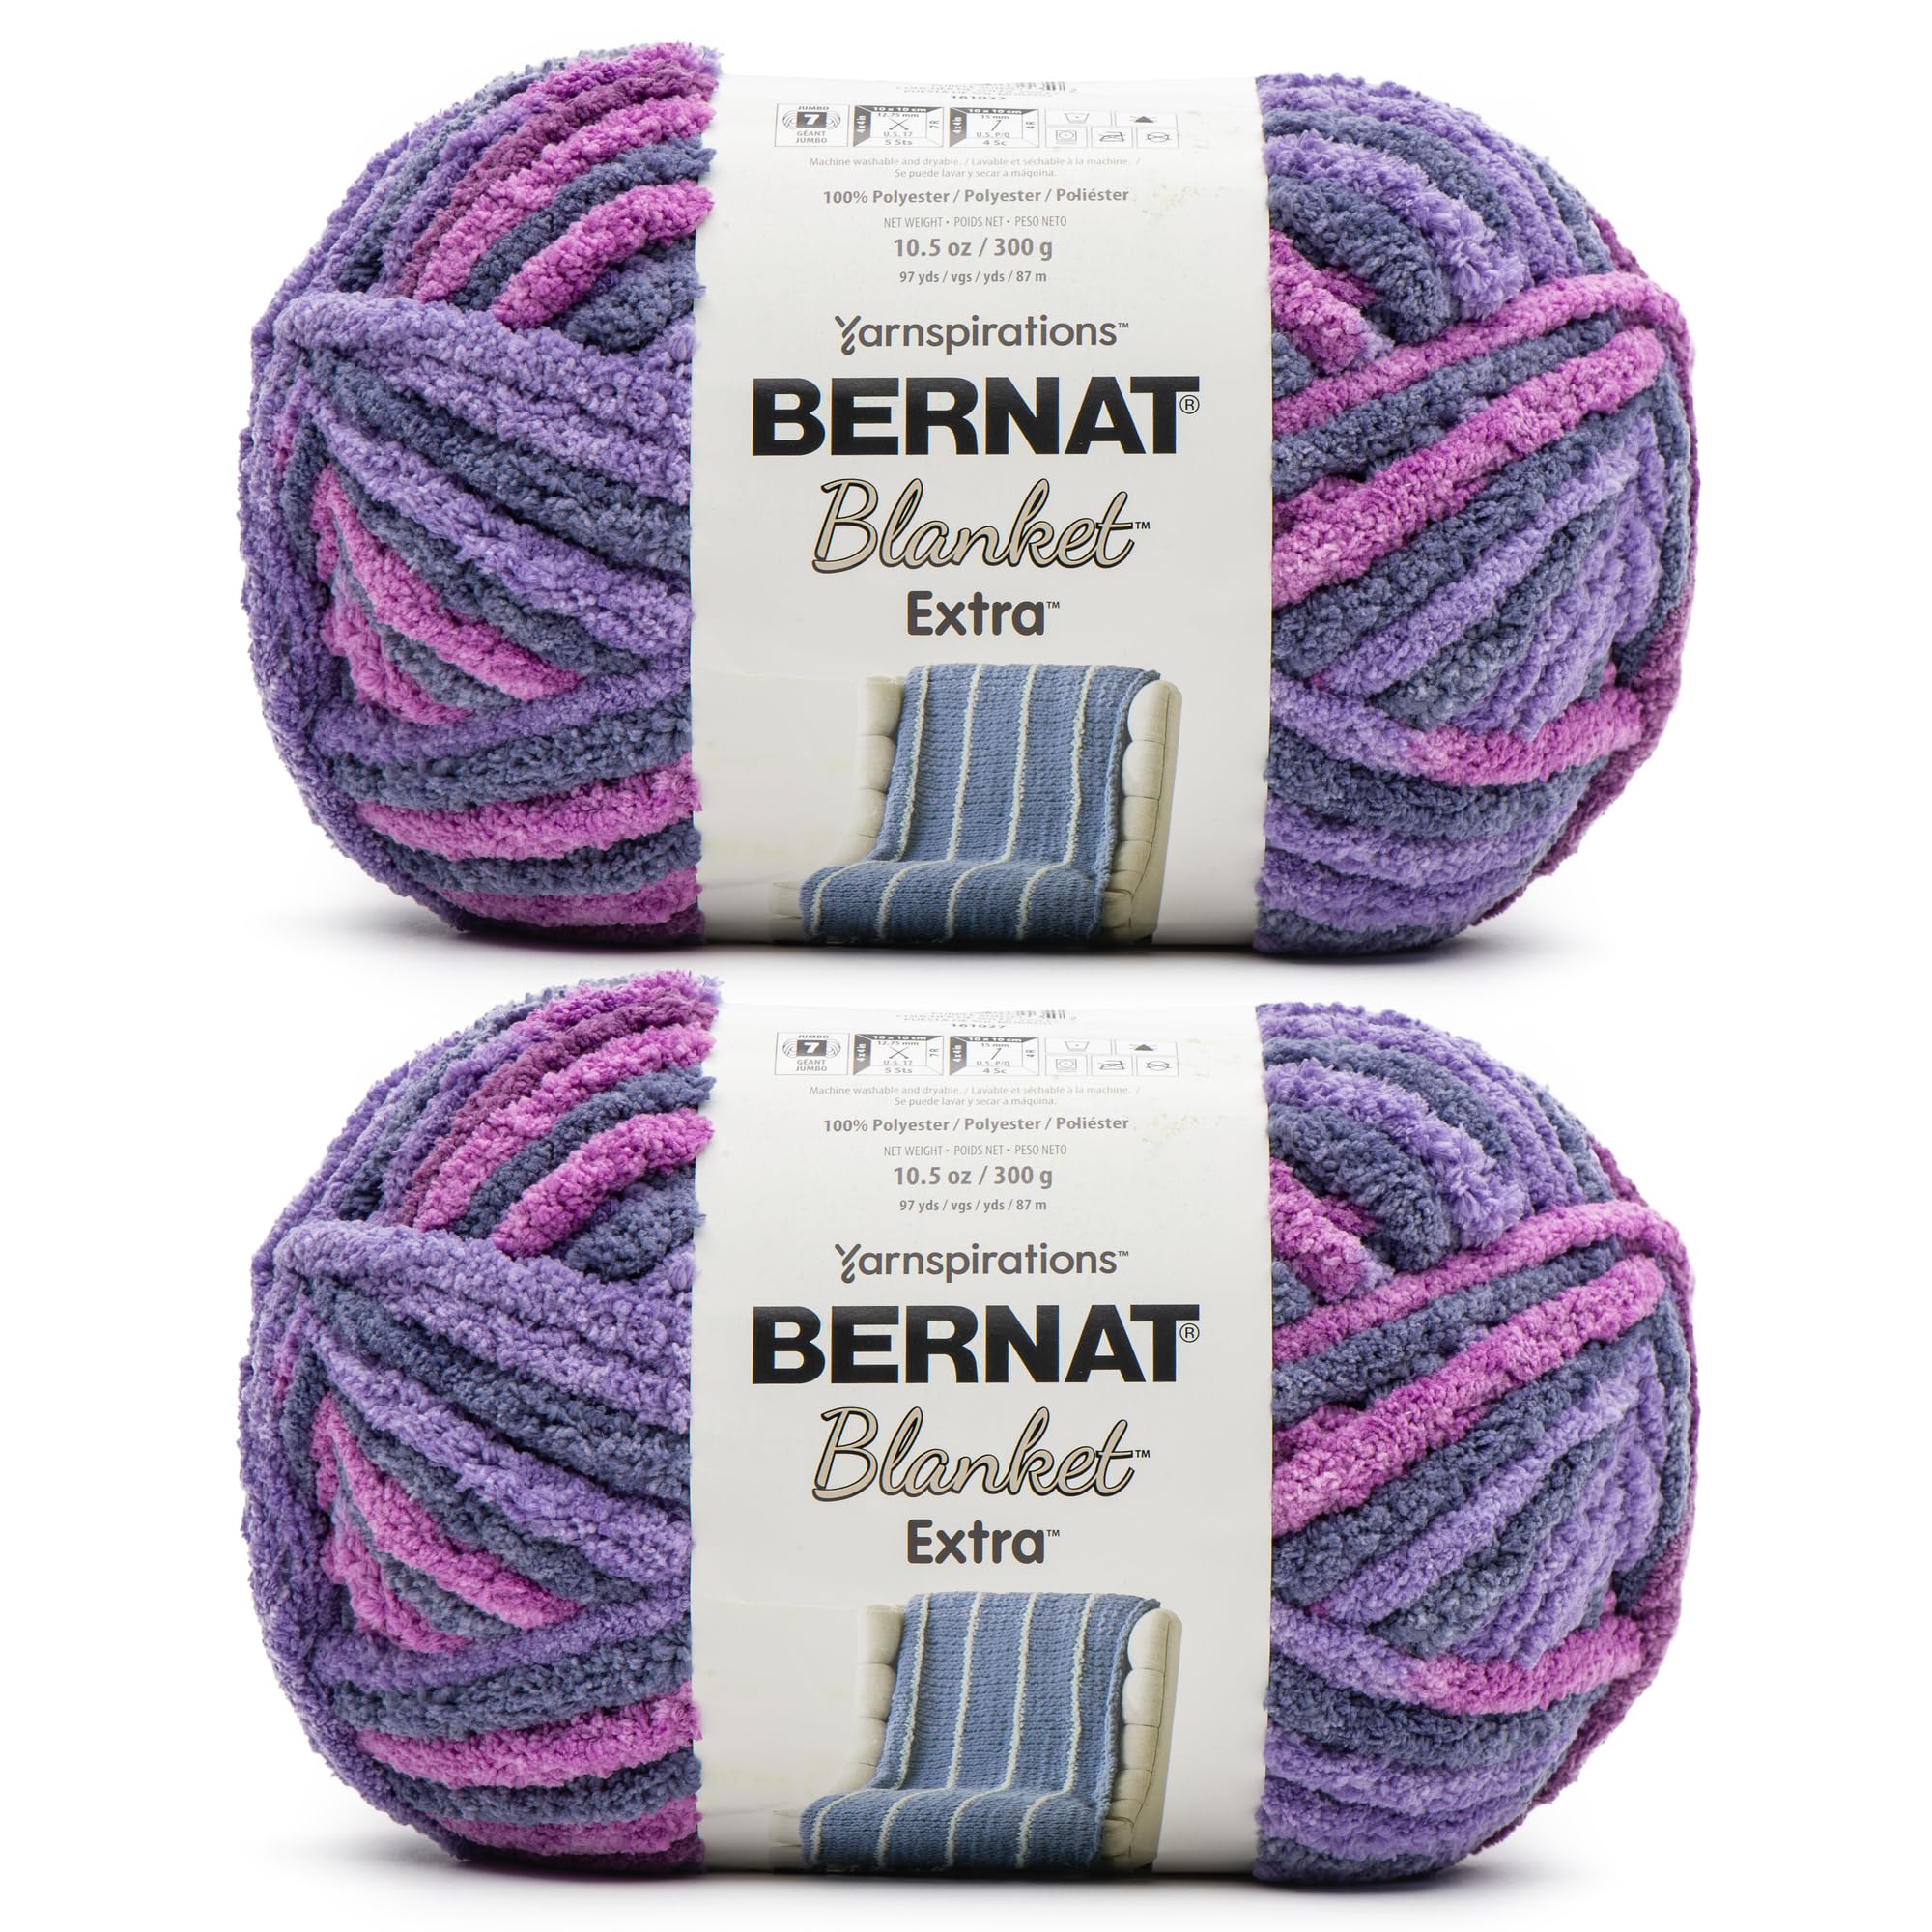 Bernat Blanket Extra Purple Sunset Yarn - 2 Pack of 10.5oz/300g - Polyester - #7 Jumbo - 97 Yards - Knitting, Crocheting, Crafts & Amigurumi, Chunky Chenille Yarn